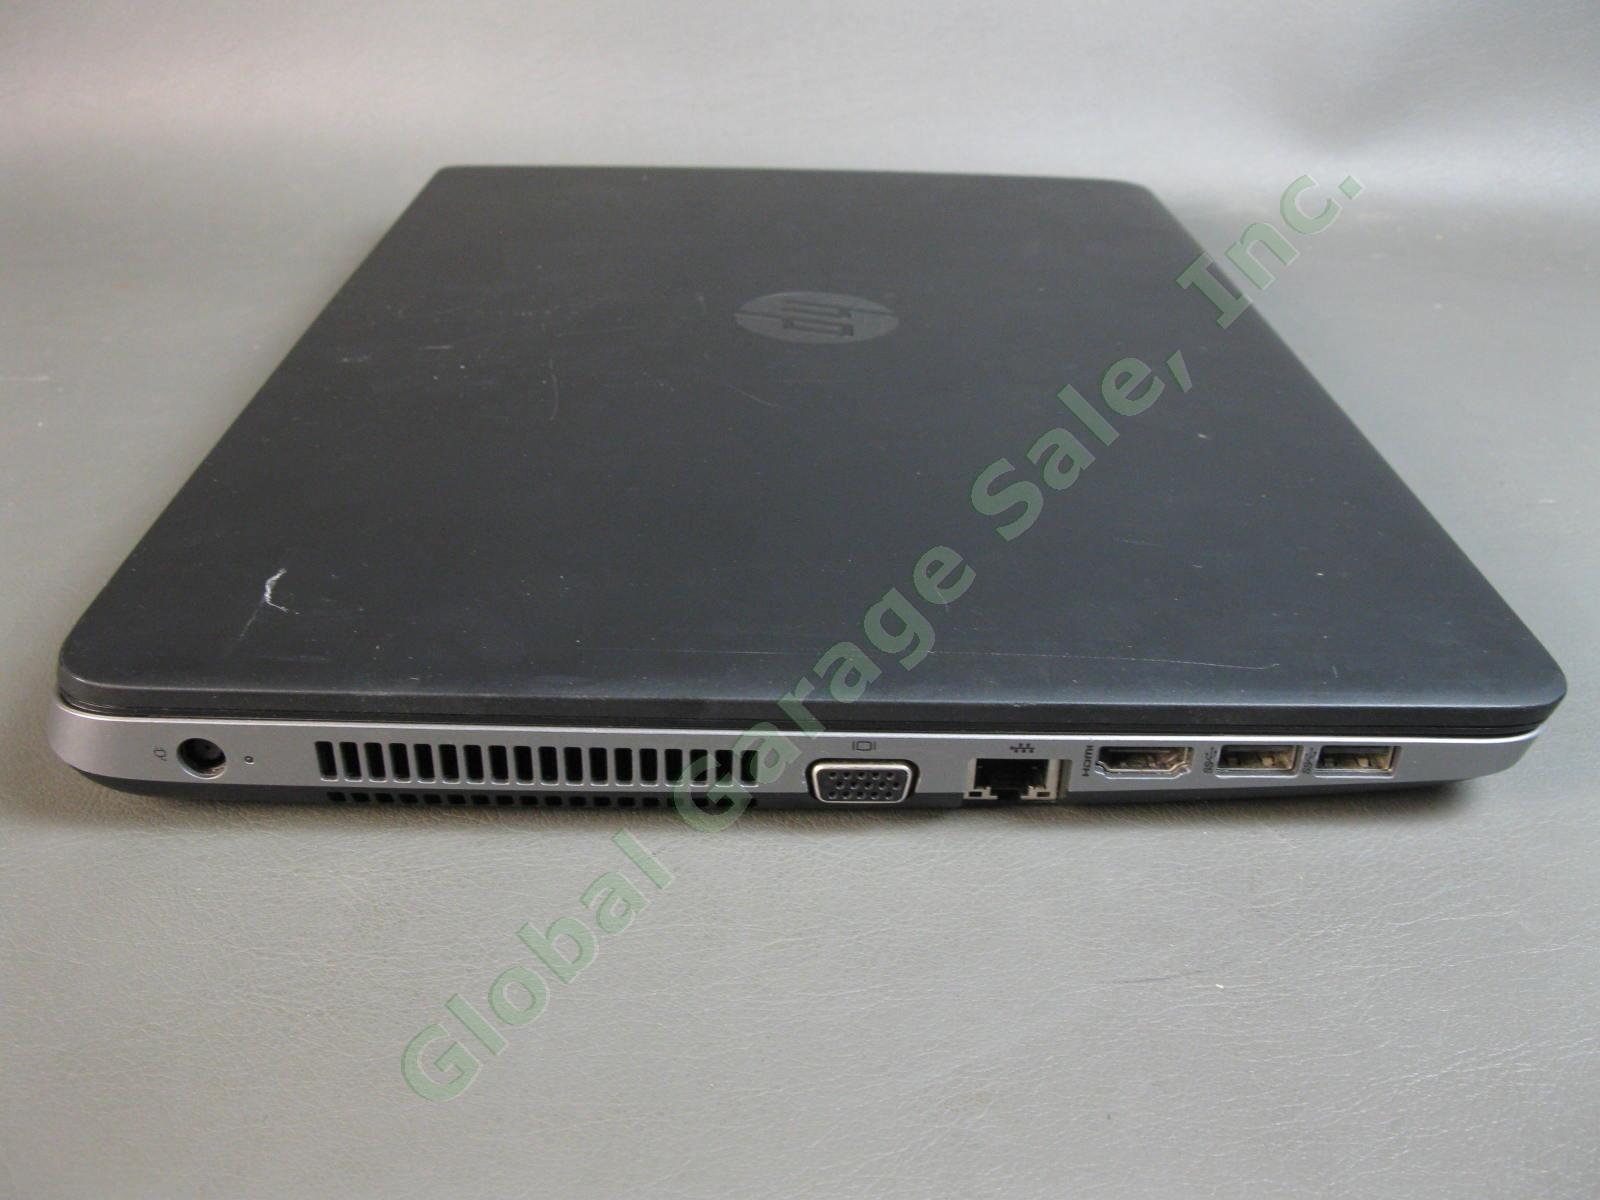 HP ProBook 450 G1 Laptop Computer i5-4200M 4GB 320GB Win10 WIFI DVD Webcam Power 4